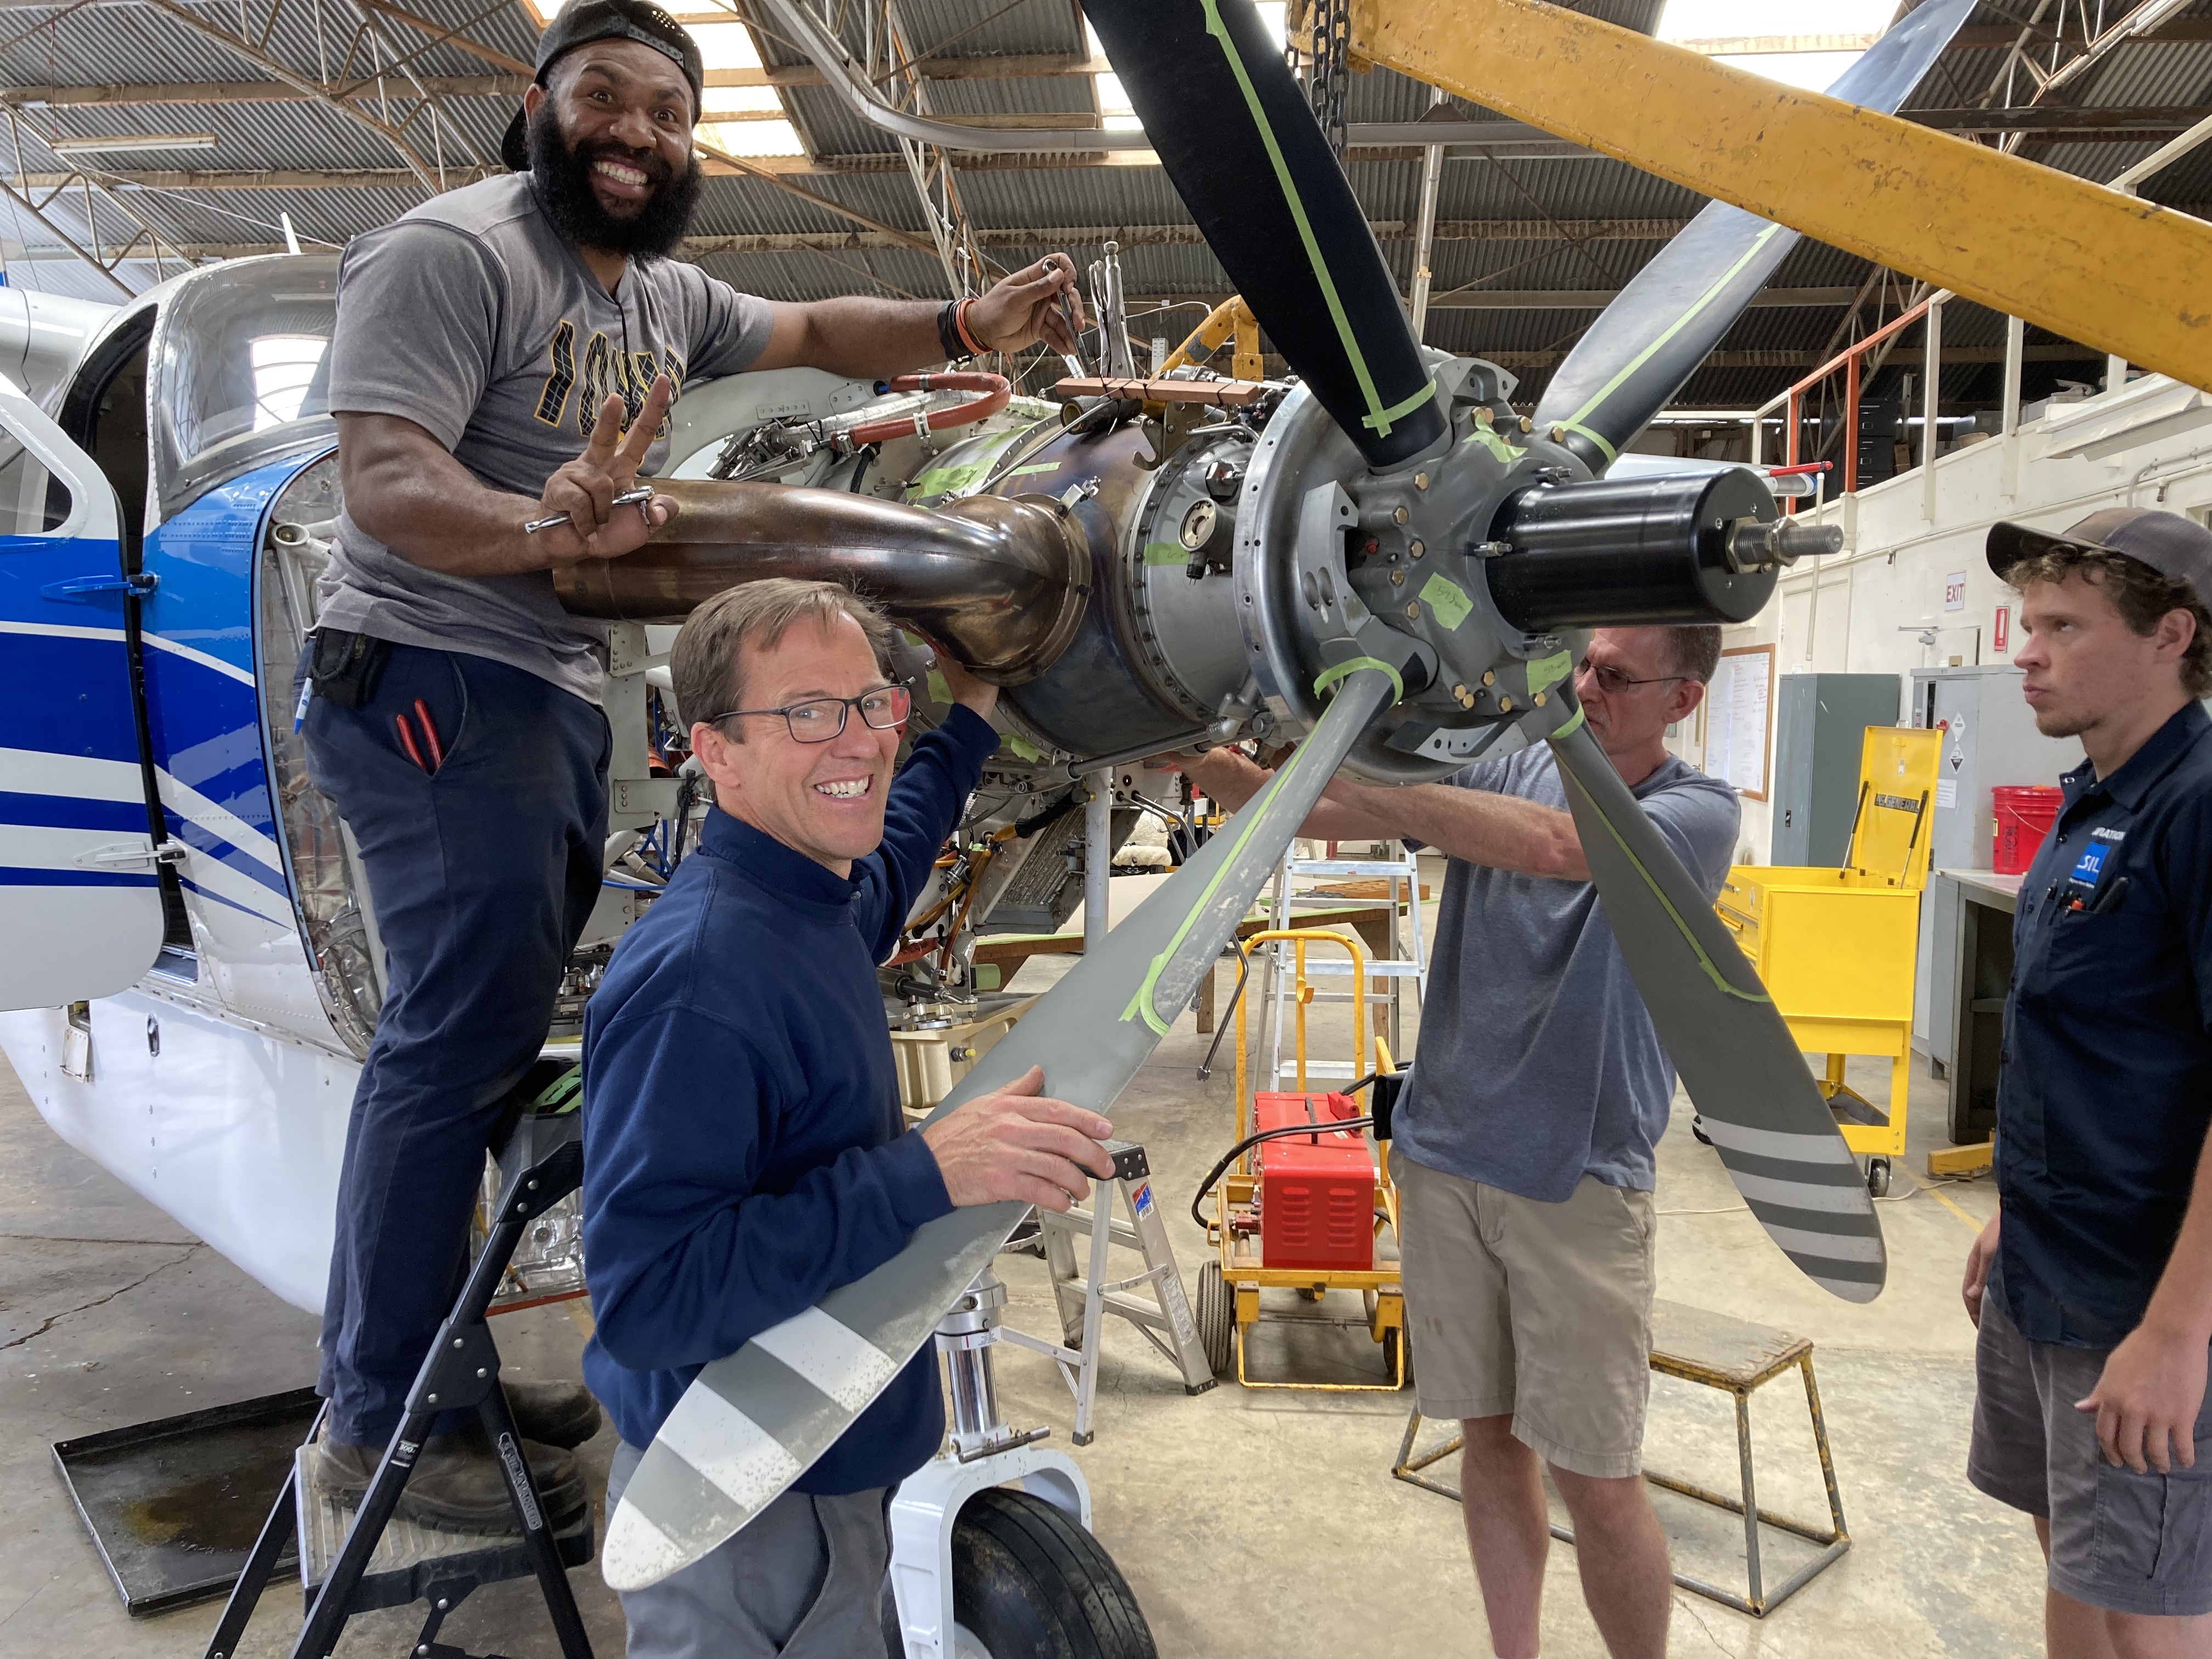 Four men work on an engine in a hangar